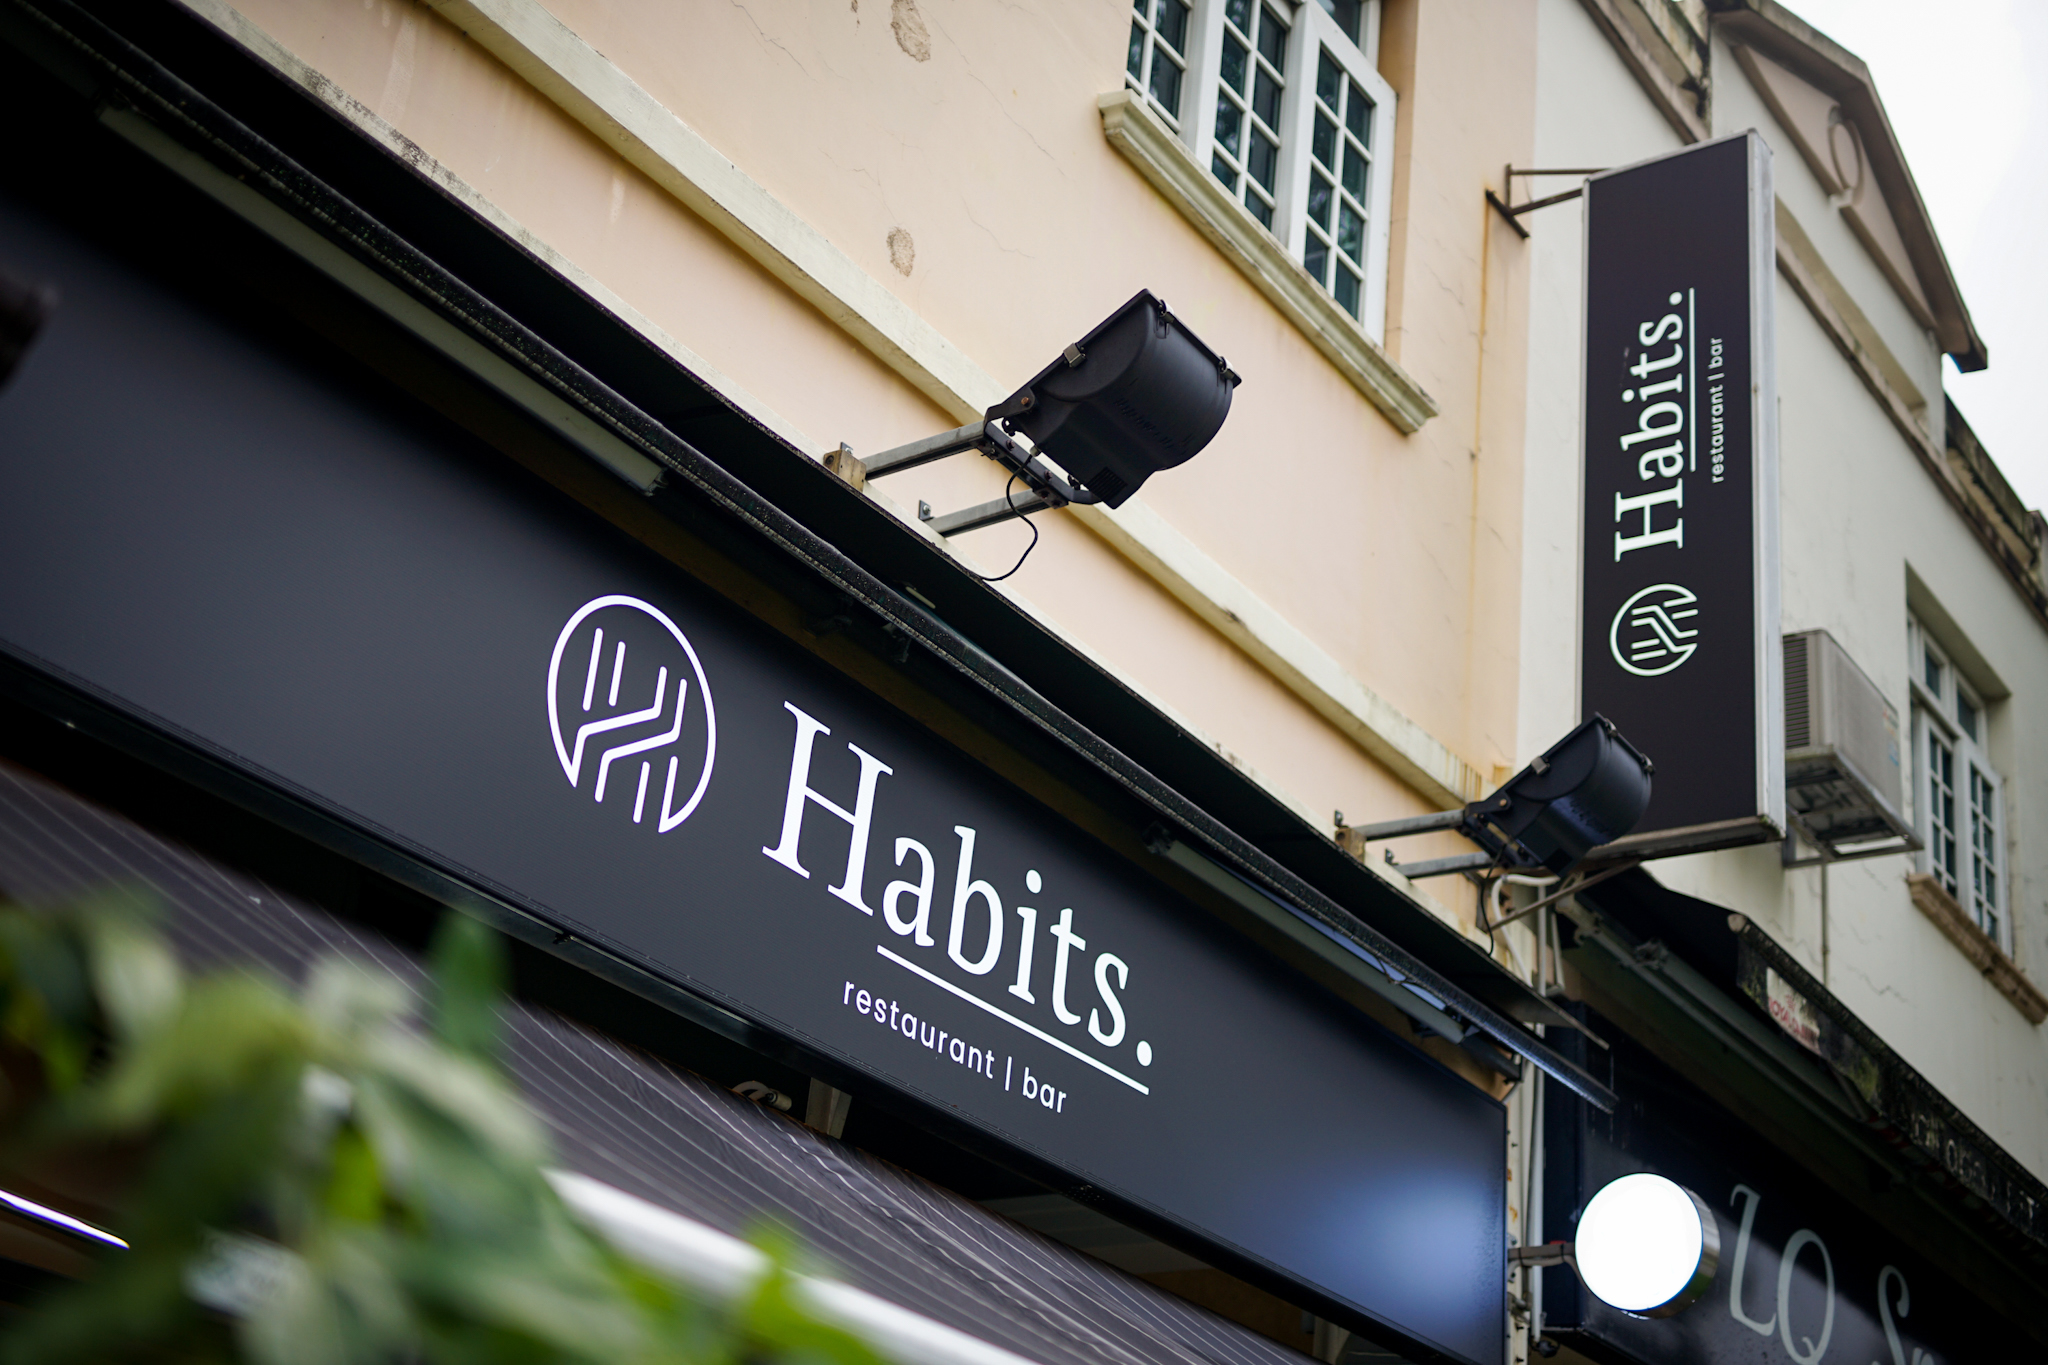 Habits Restaurant & Bar